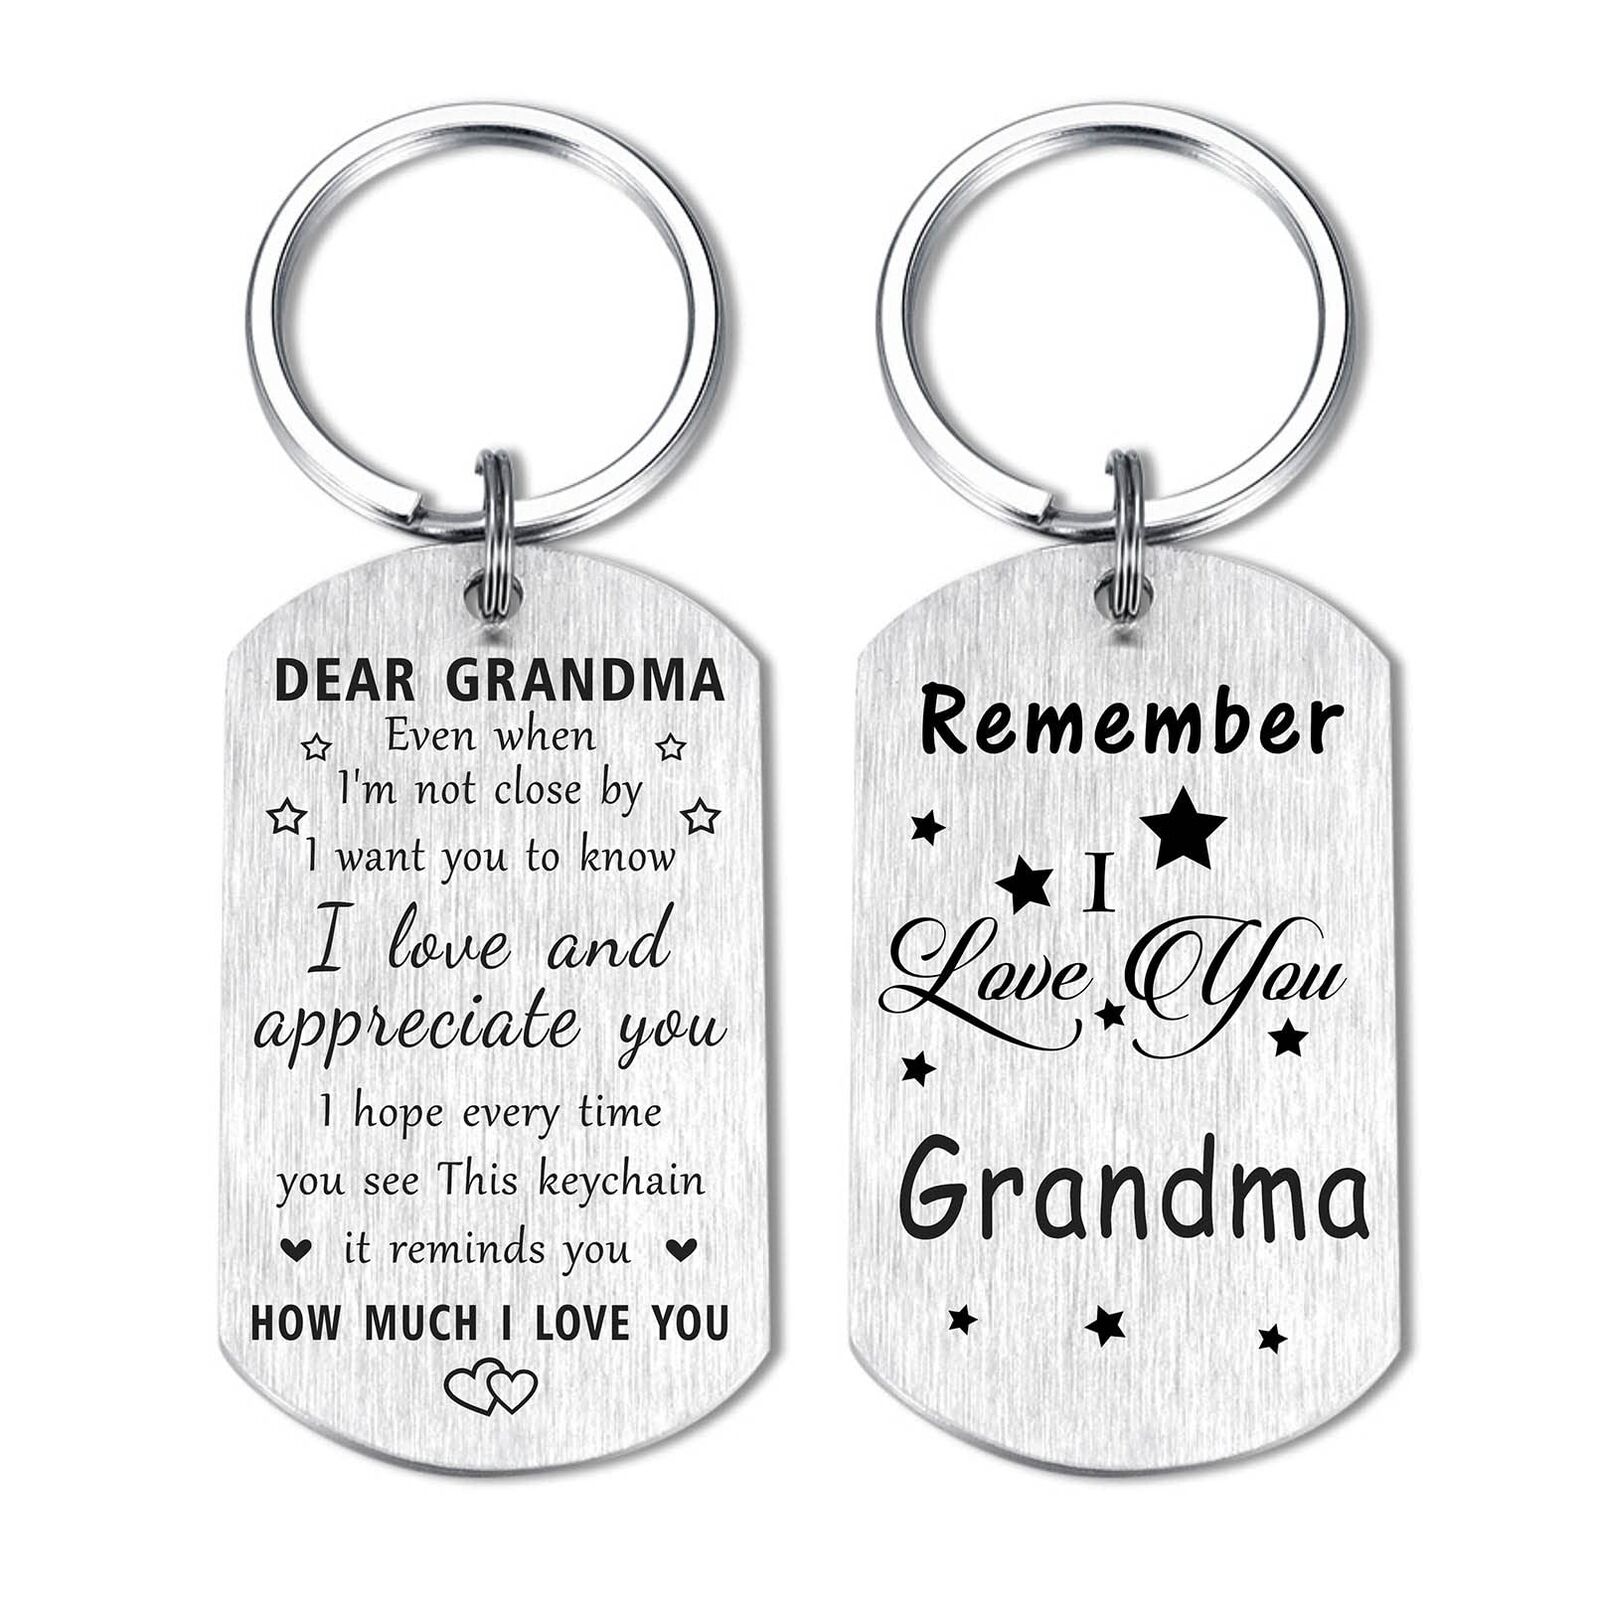 Resdink Grandma Gifts for Women - Remember I Love You Grandma Gifts Happy Bir...